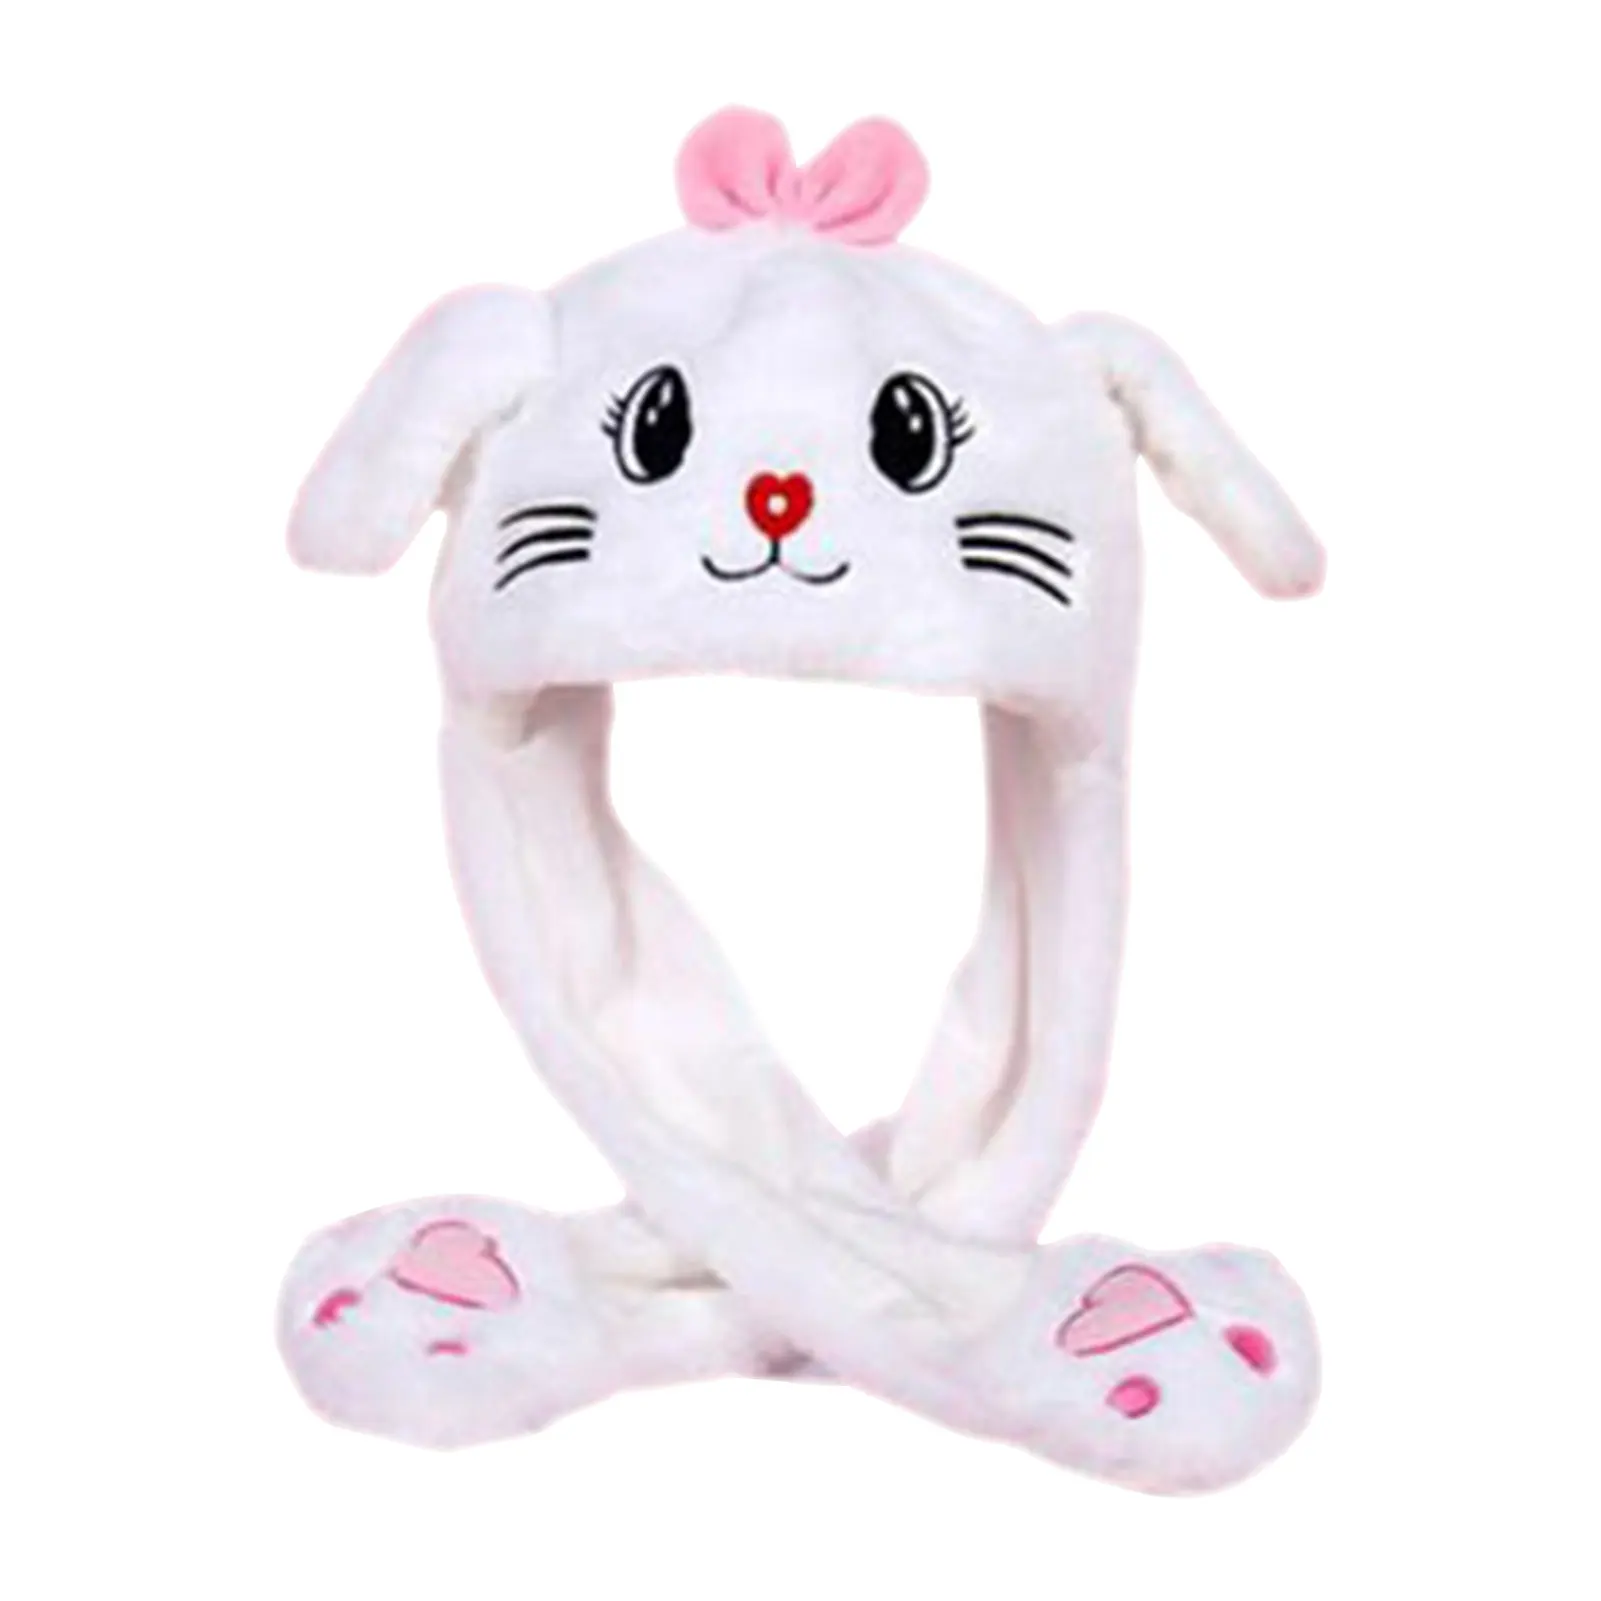 Lovely Moving Bunny Ears Hat Plush Rabbit Hat Funny Play Toy Up Down Moving Bunny Ears Toy Hat Girlfriend Children Girls Gifts